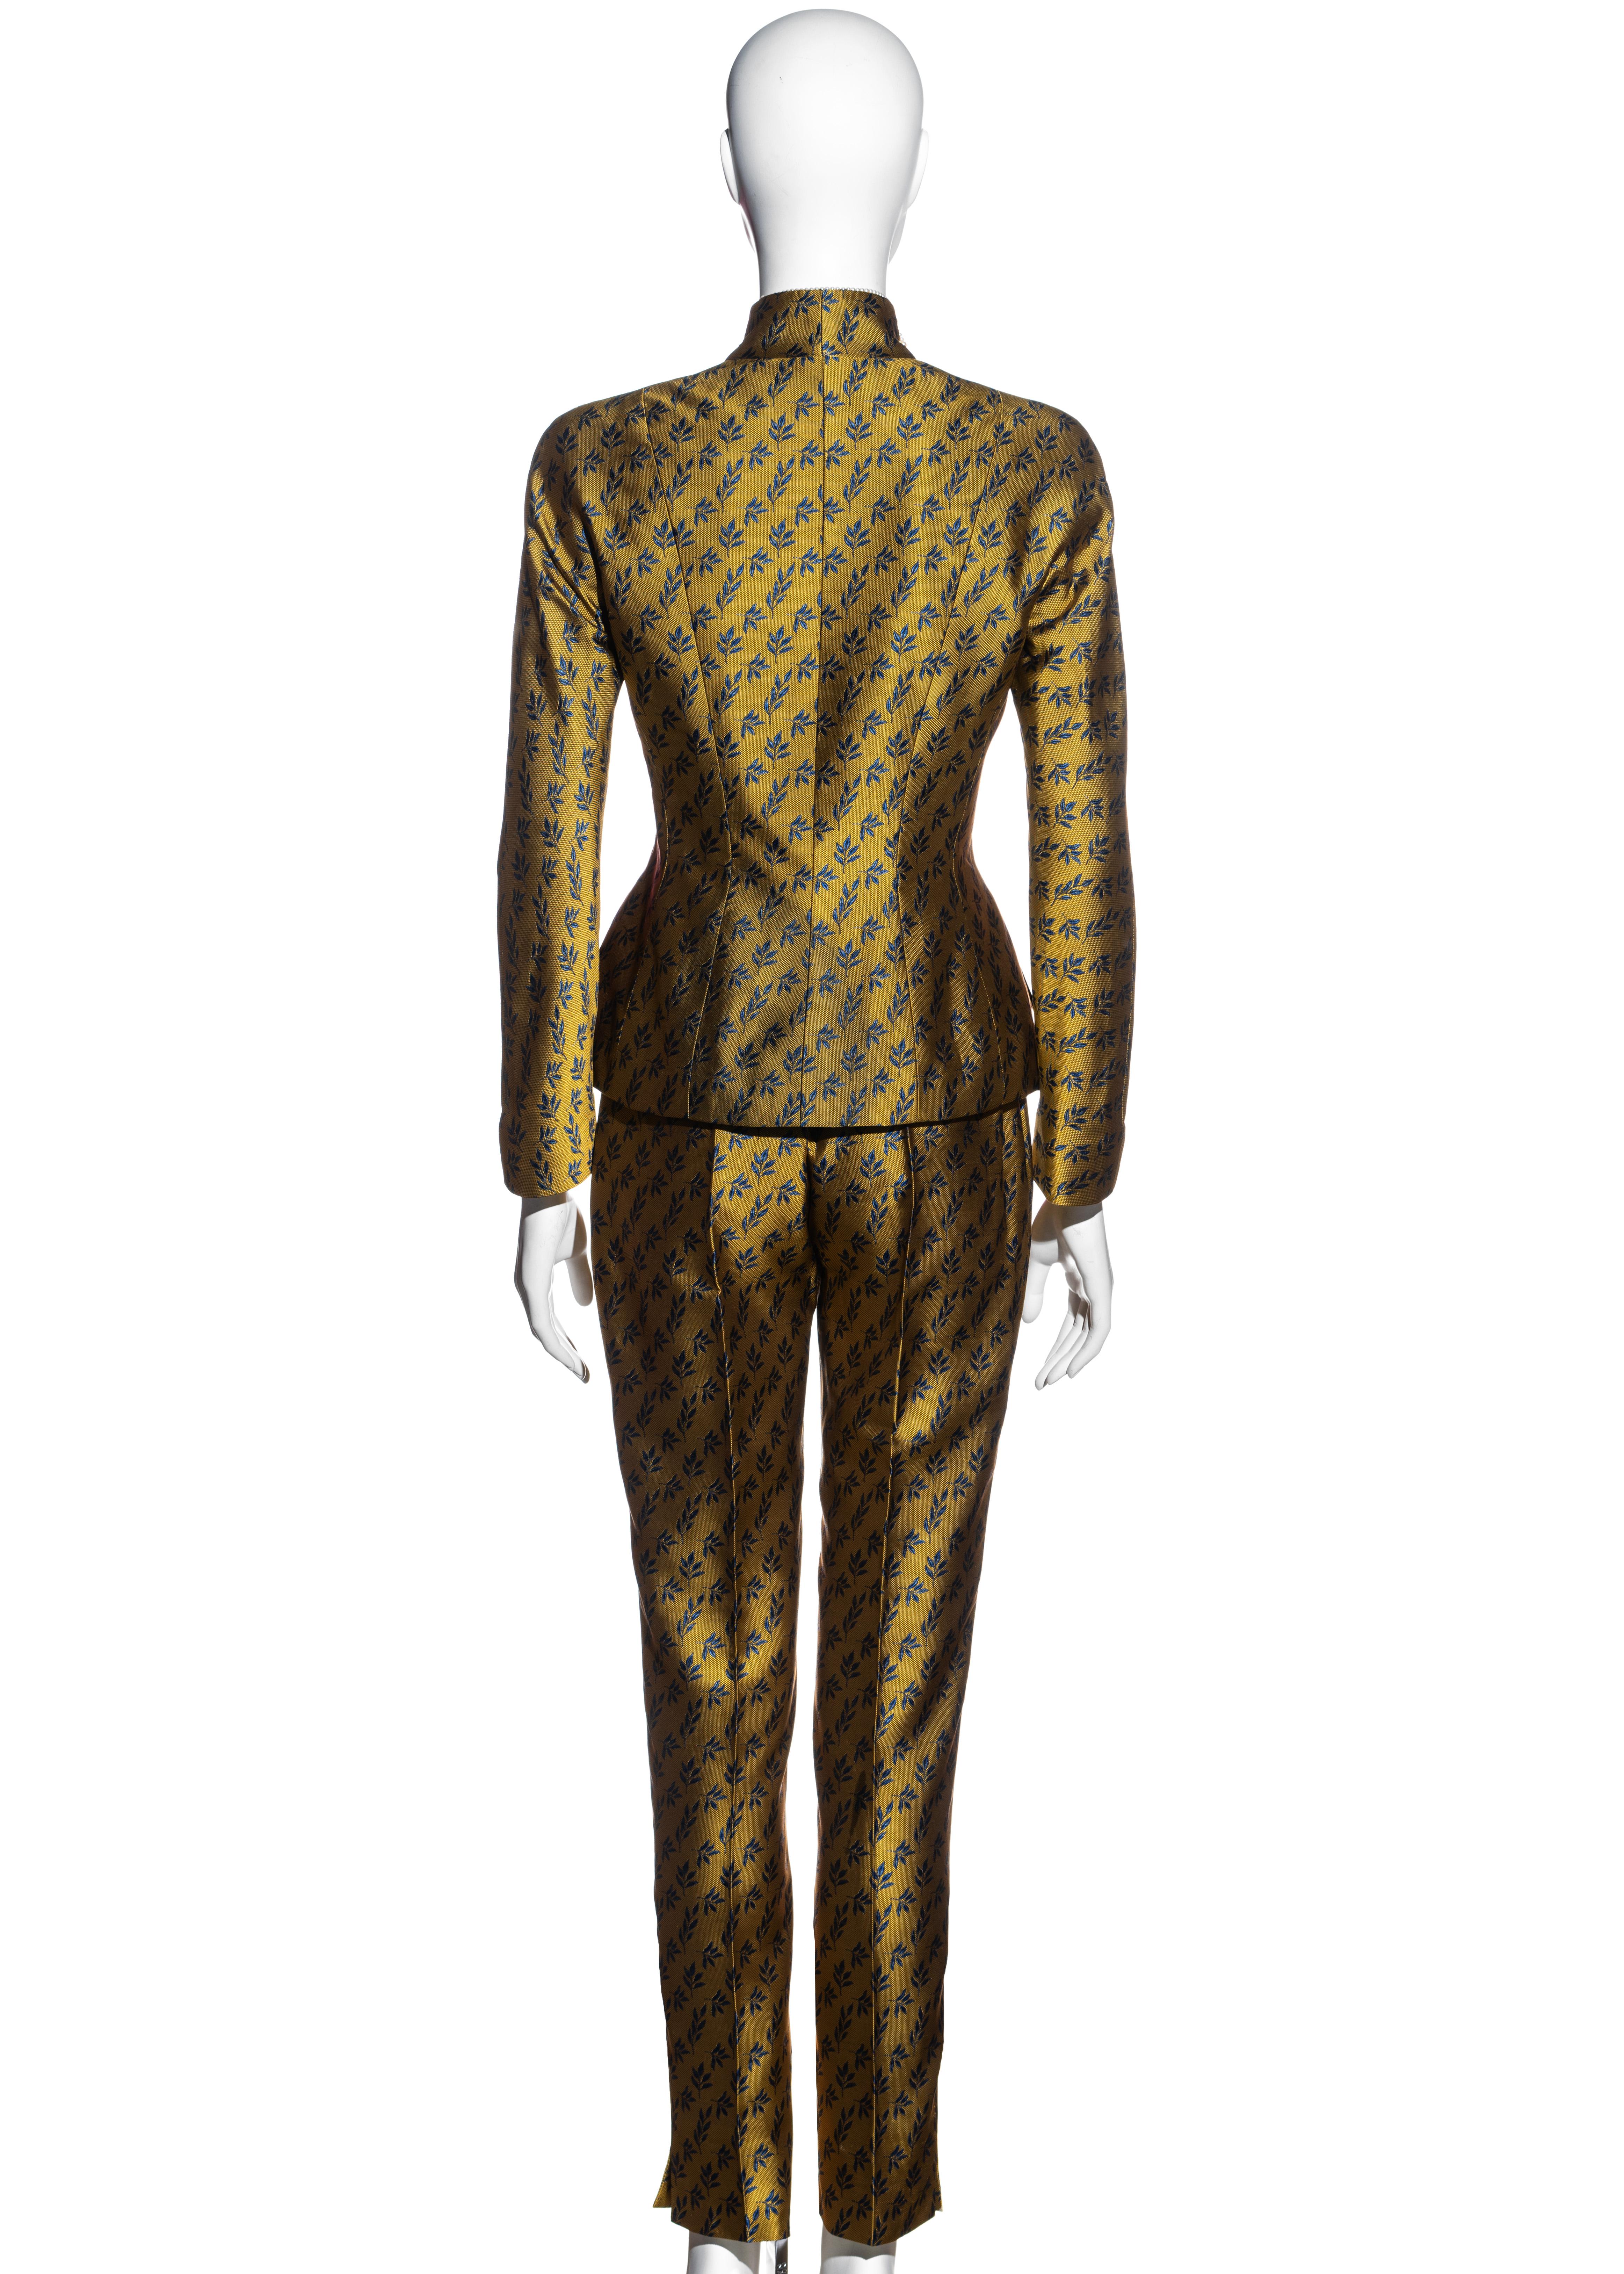 Christian Dior by John Galliano gold satin jacquard pant suit, fw 1997 2